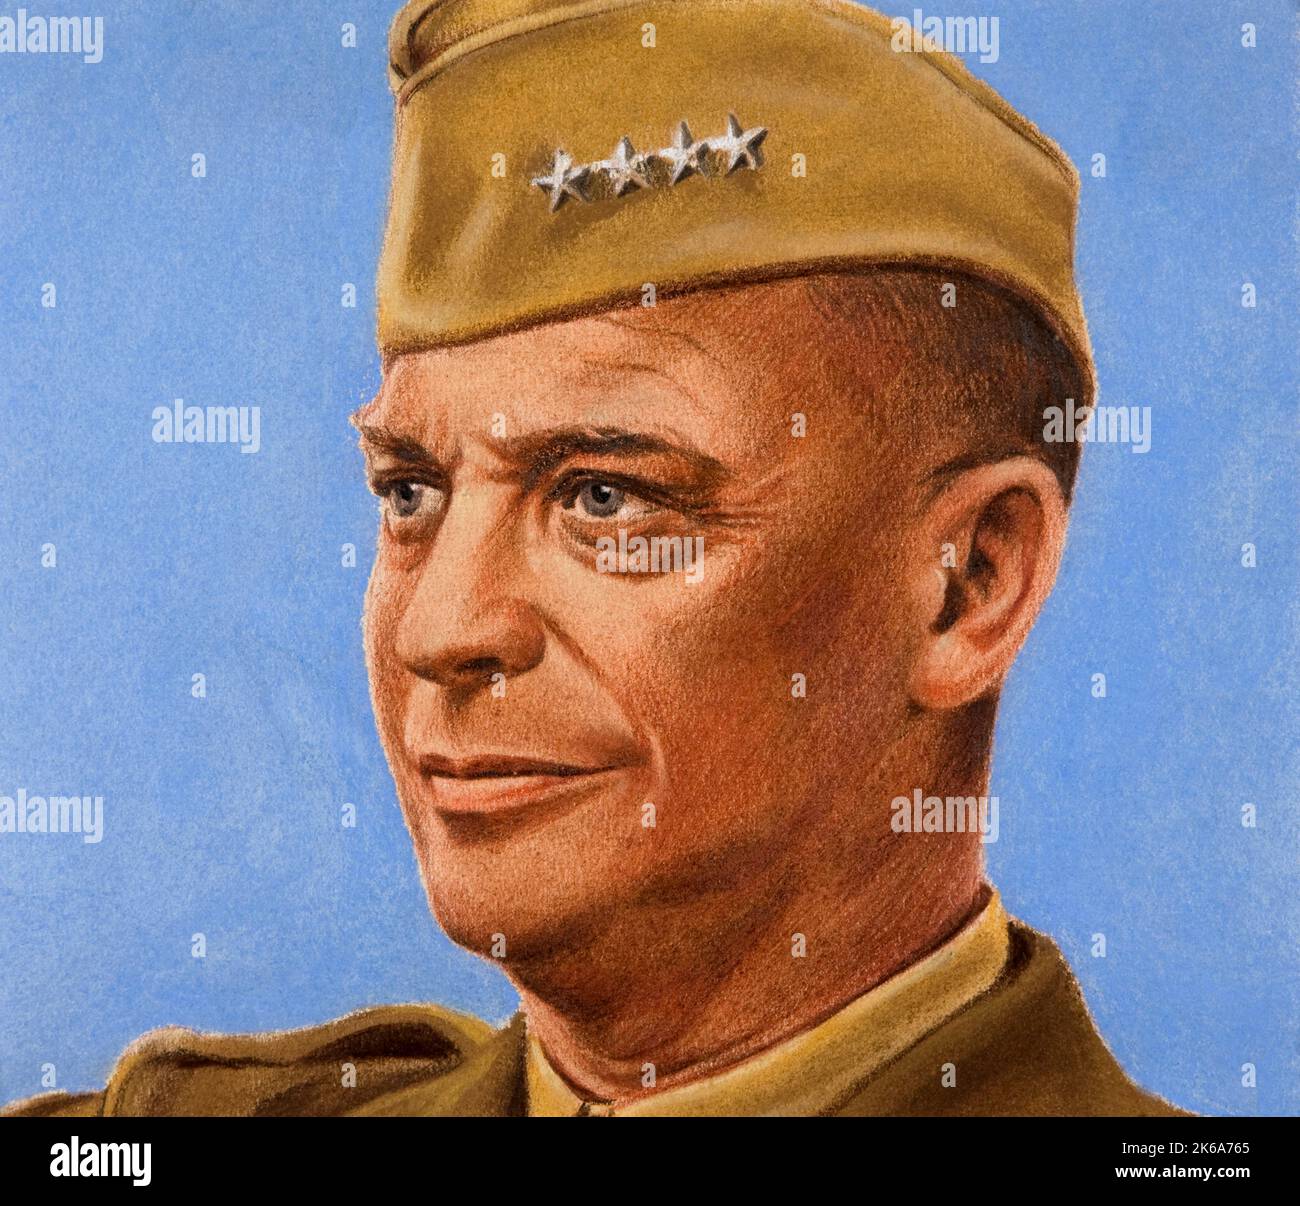 Military portrait of Dwight D. Eisenhower. Stock Photo